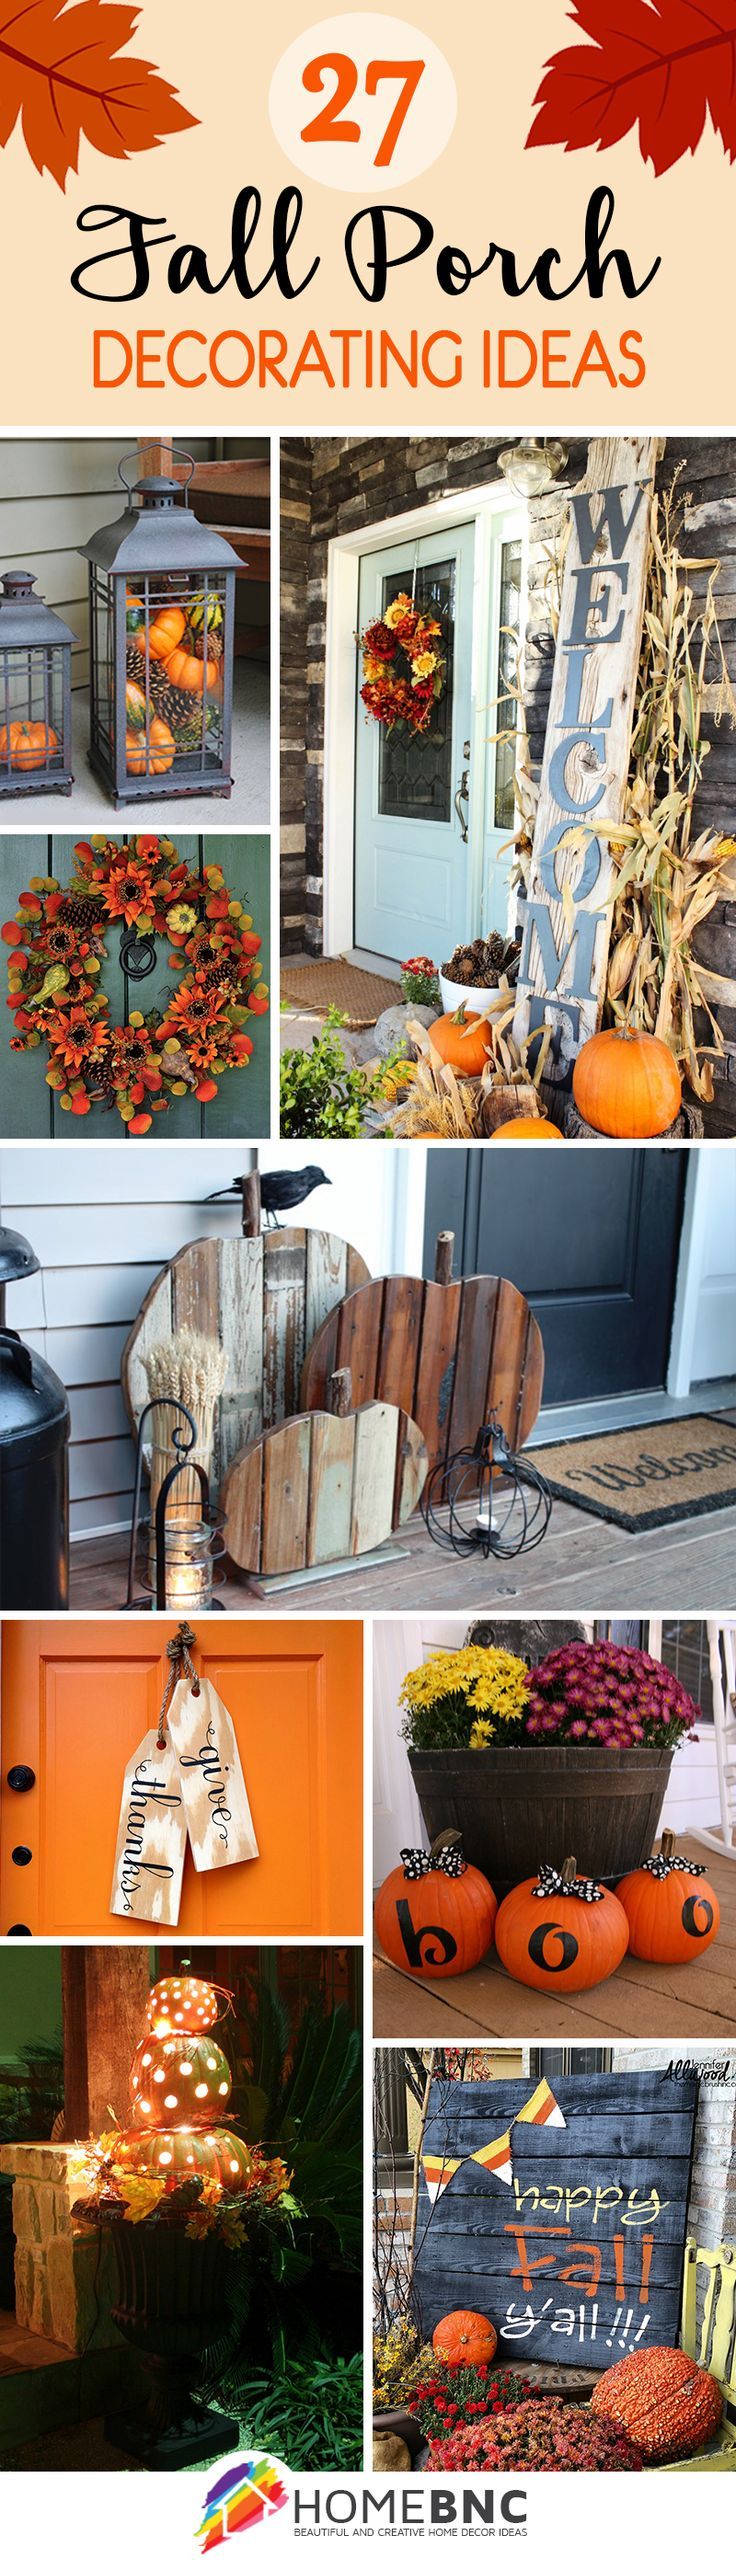 Fall Porch Decorations